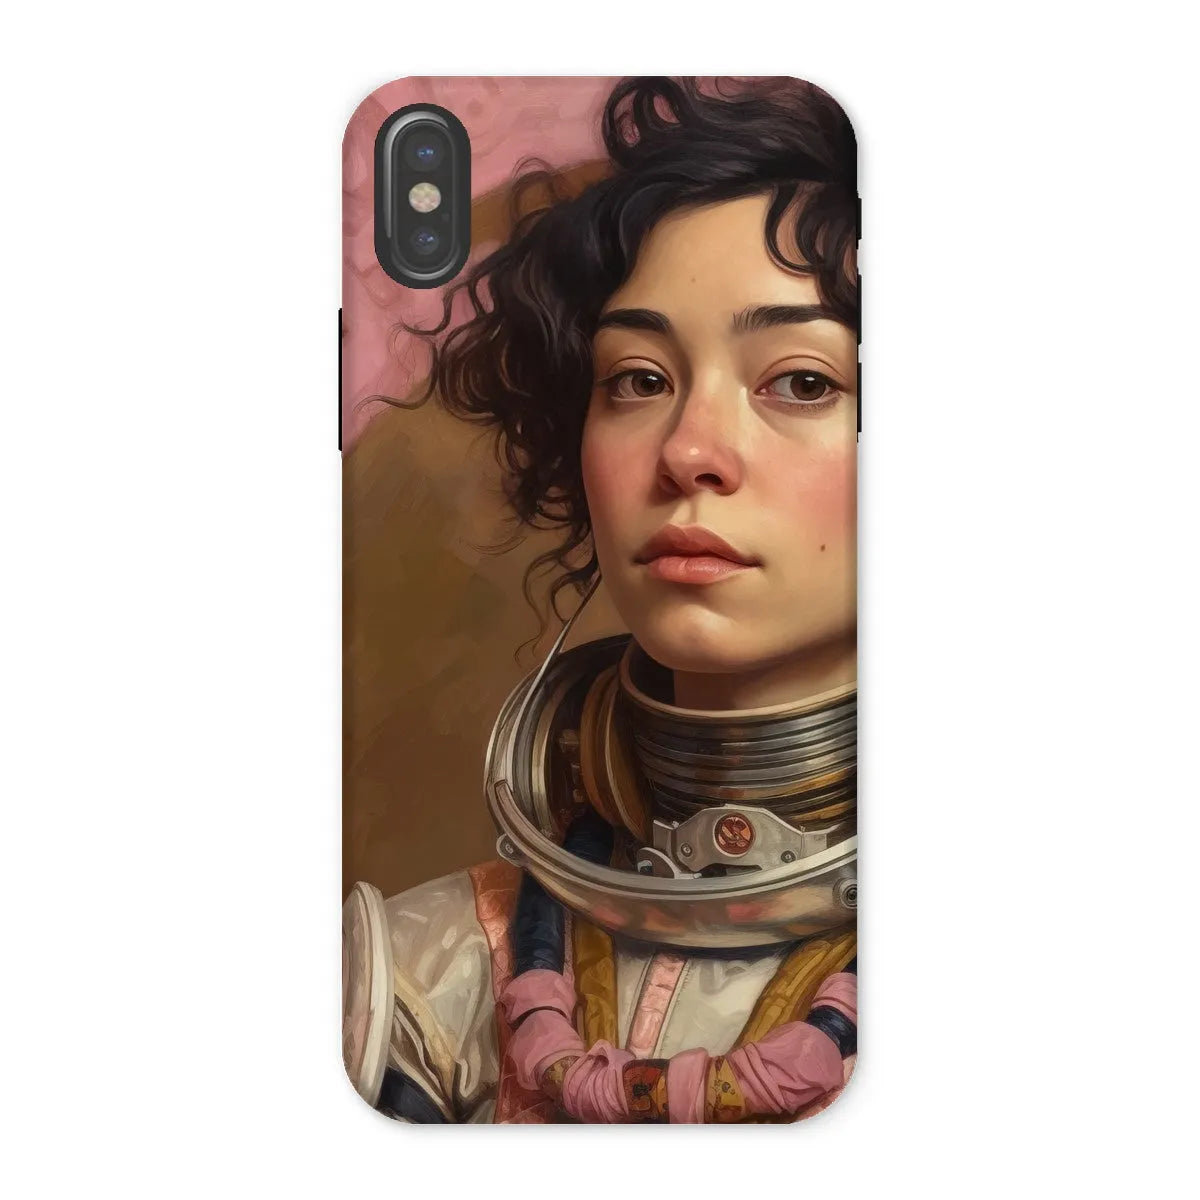 Faustina The Lesbian Astronaut - Lgbtq Art Phone Case - Iphone x / Matte - Mobile Phone Cases - Aesthetic Art